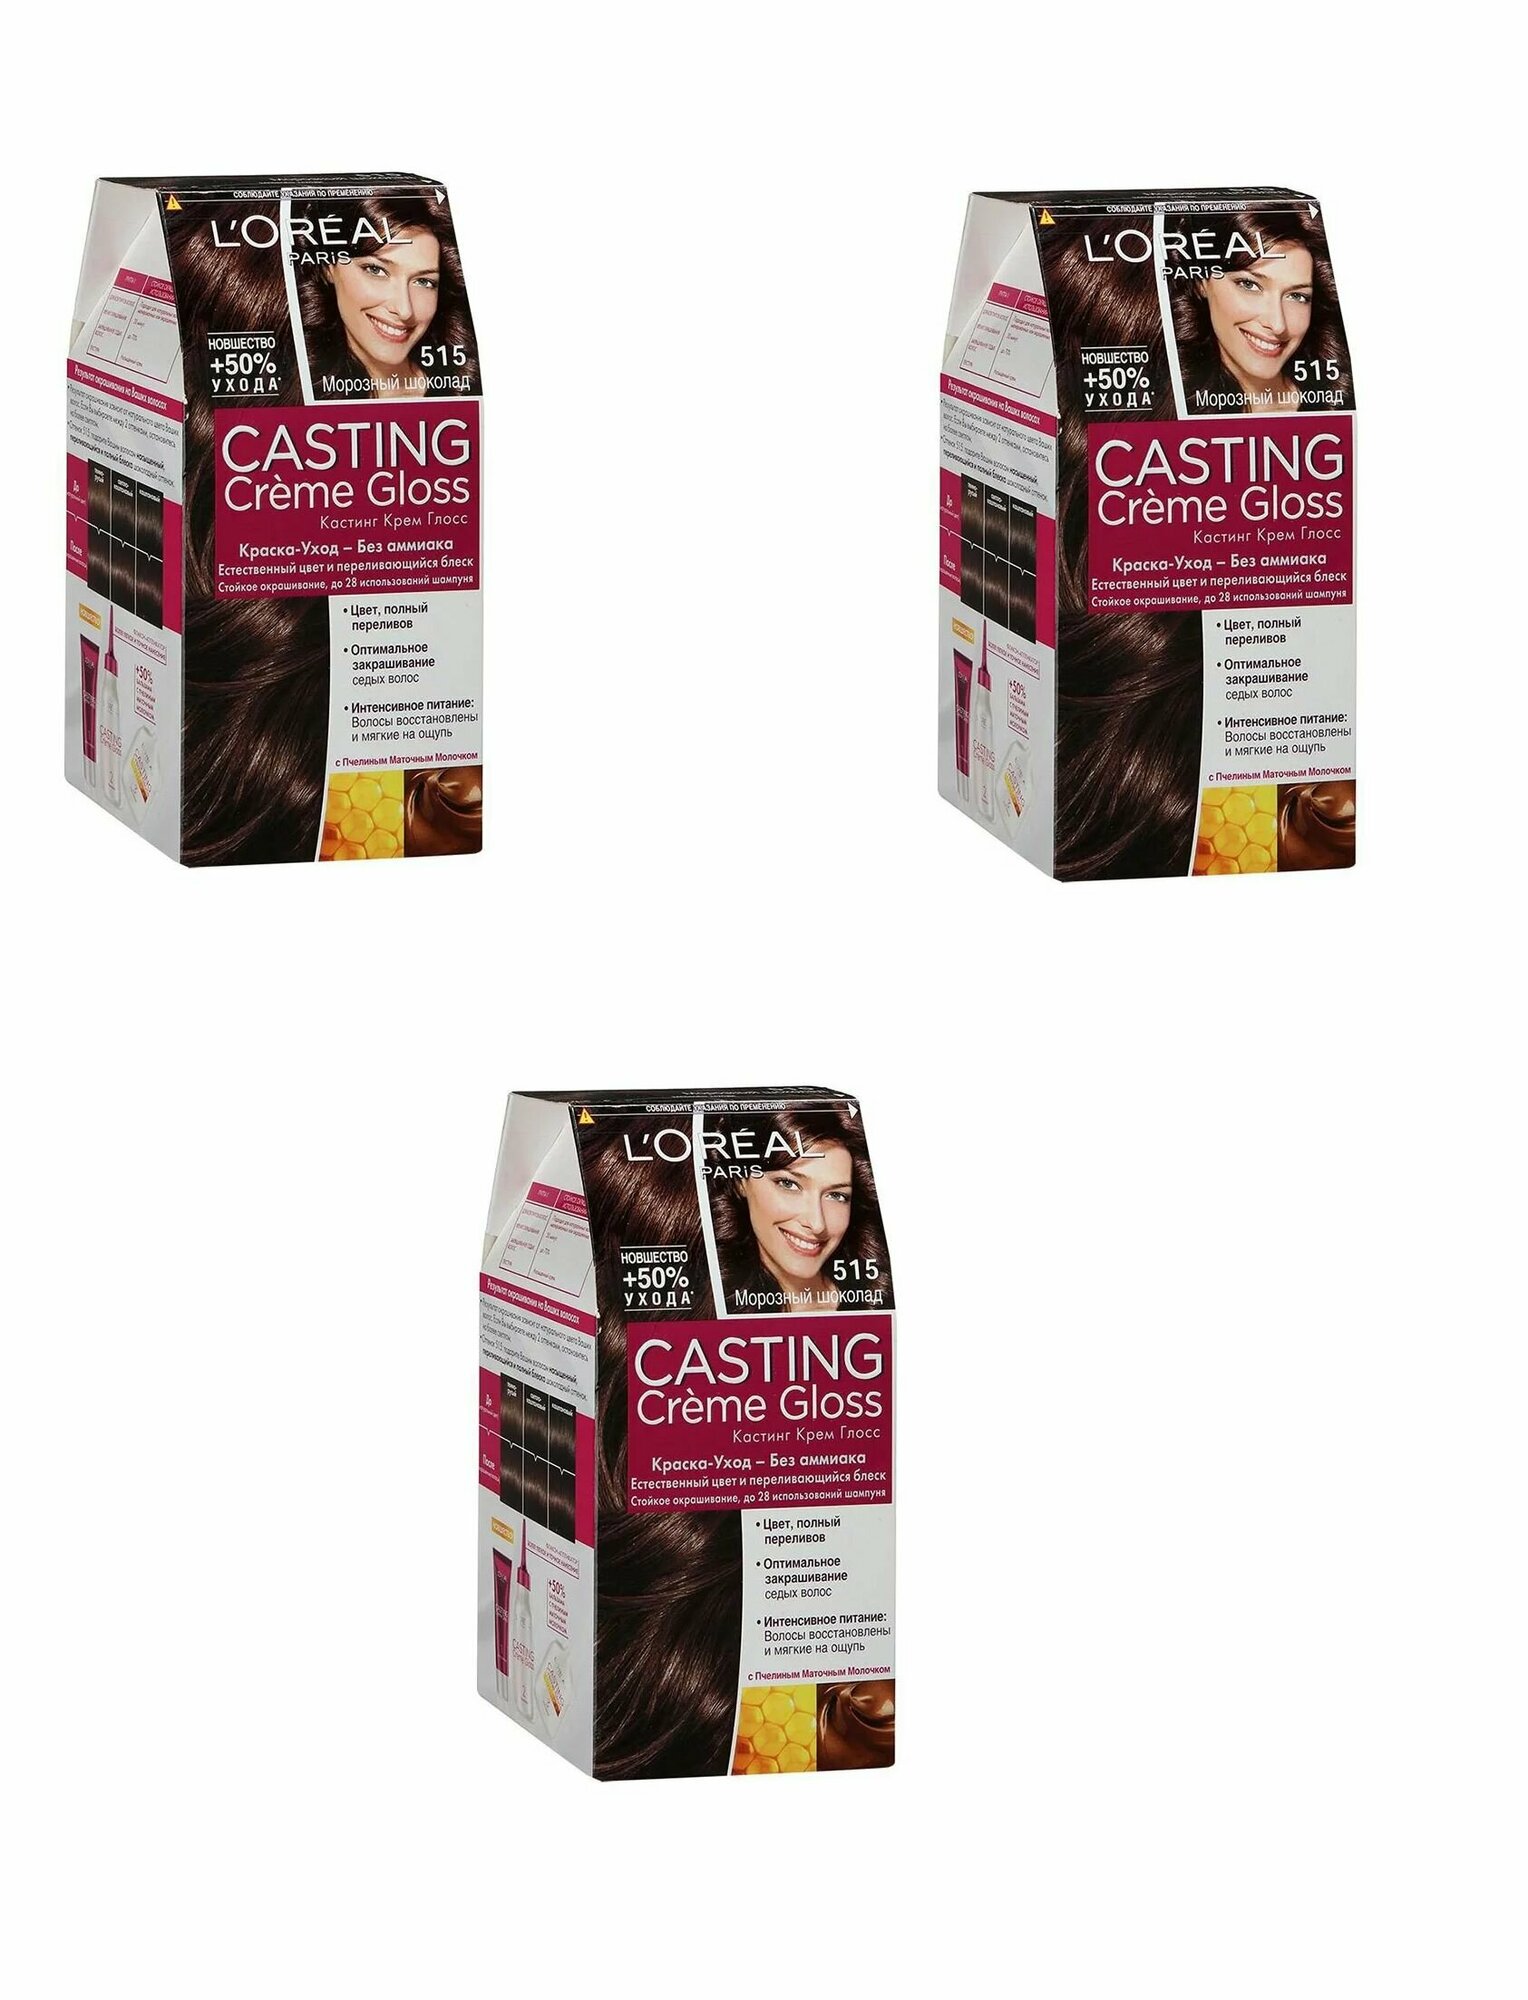 L'Oreal Paris Краска-уход для волос Casting Creme Gloss 515 Морозный шоколад,3 уп